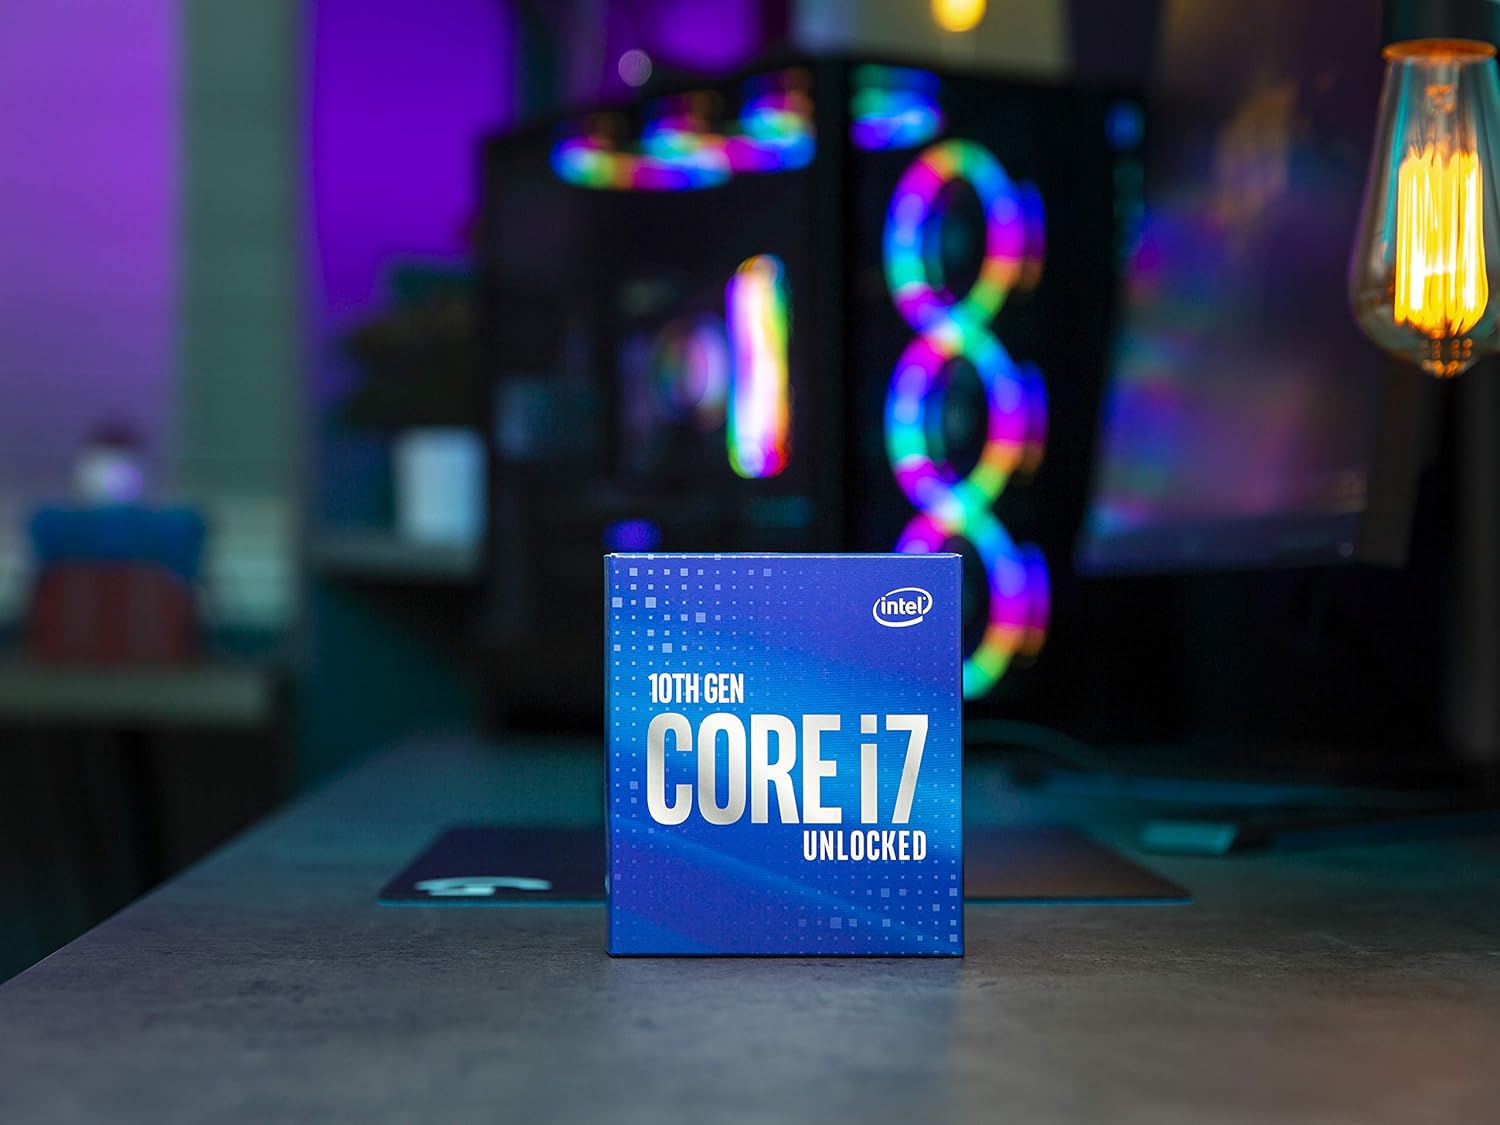 Intel Core i7-10700K Desktop Processor 8 Cores up to 5.1 GHz Unlocked LGA1200 (Intel 400 Series Chipset) 125W (BX8070110700K)